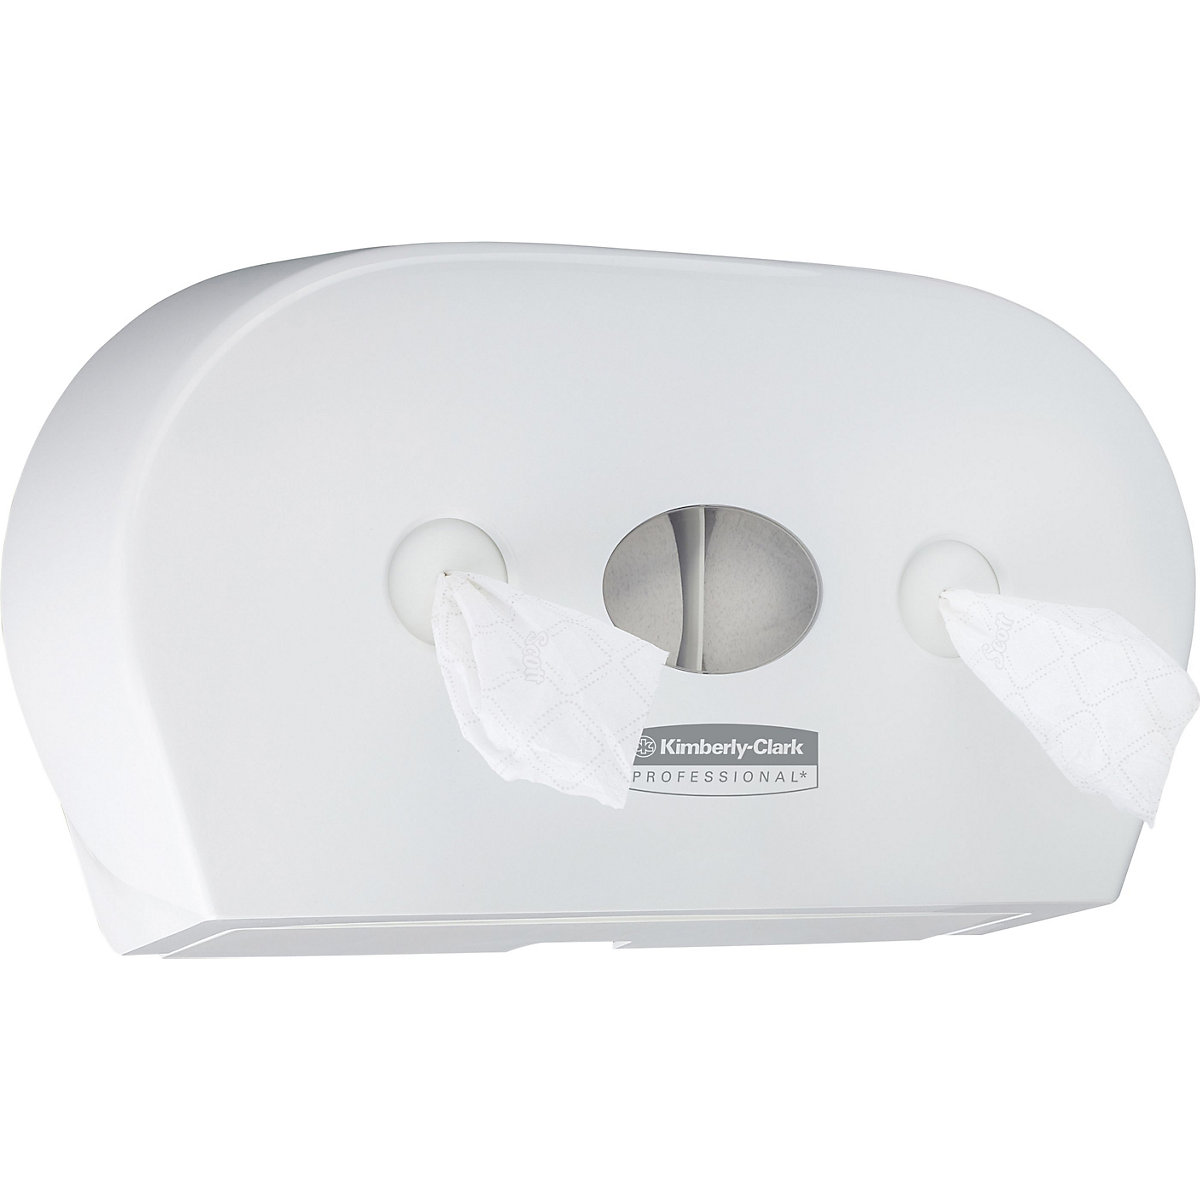 Scott® Control™ 7186 mini toilet paper dispenser - Kimberly-Clark